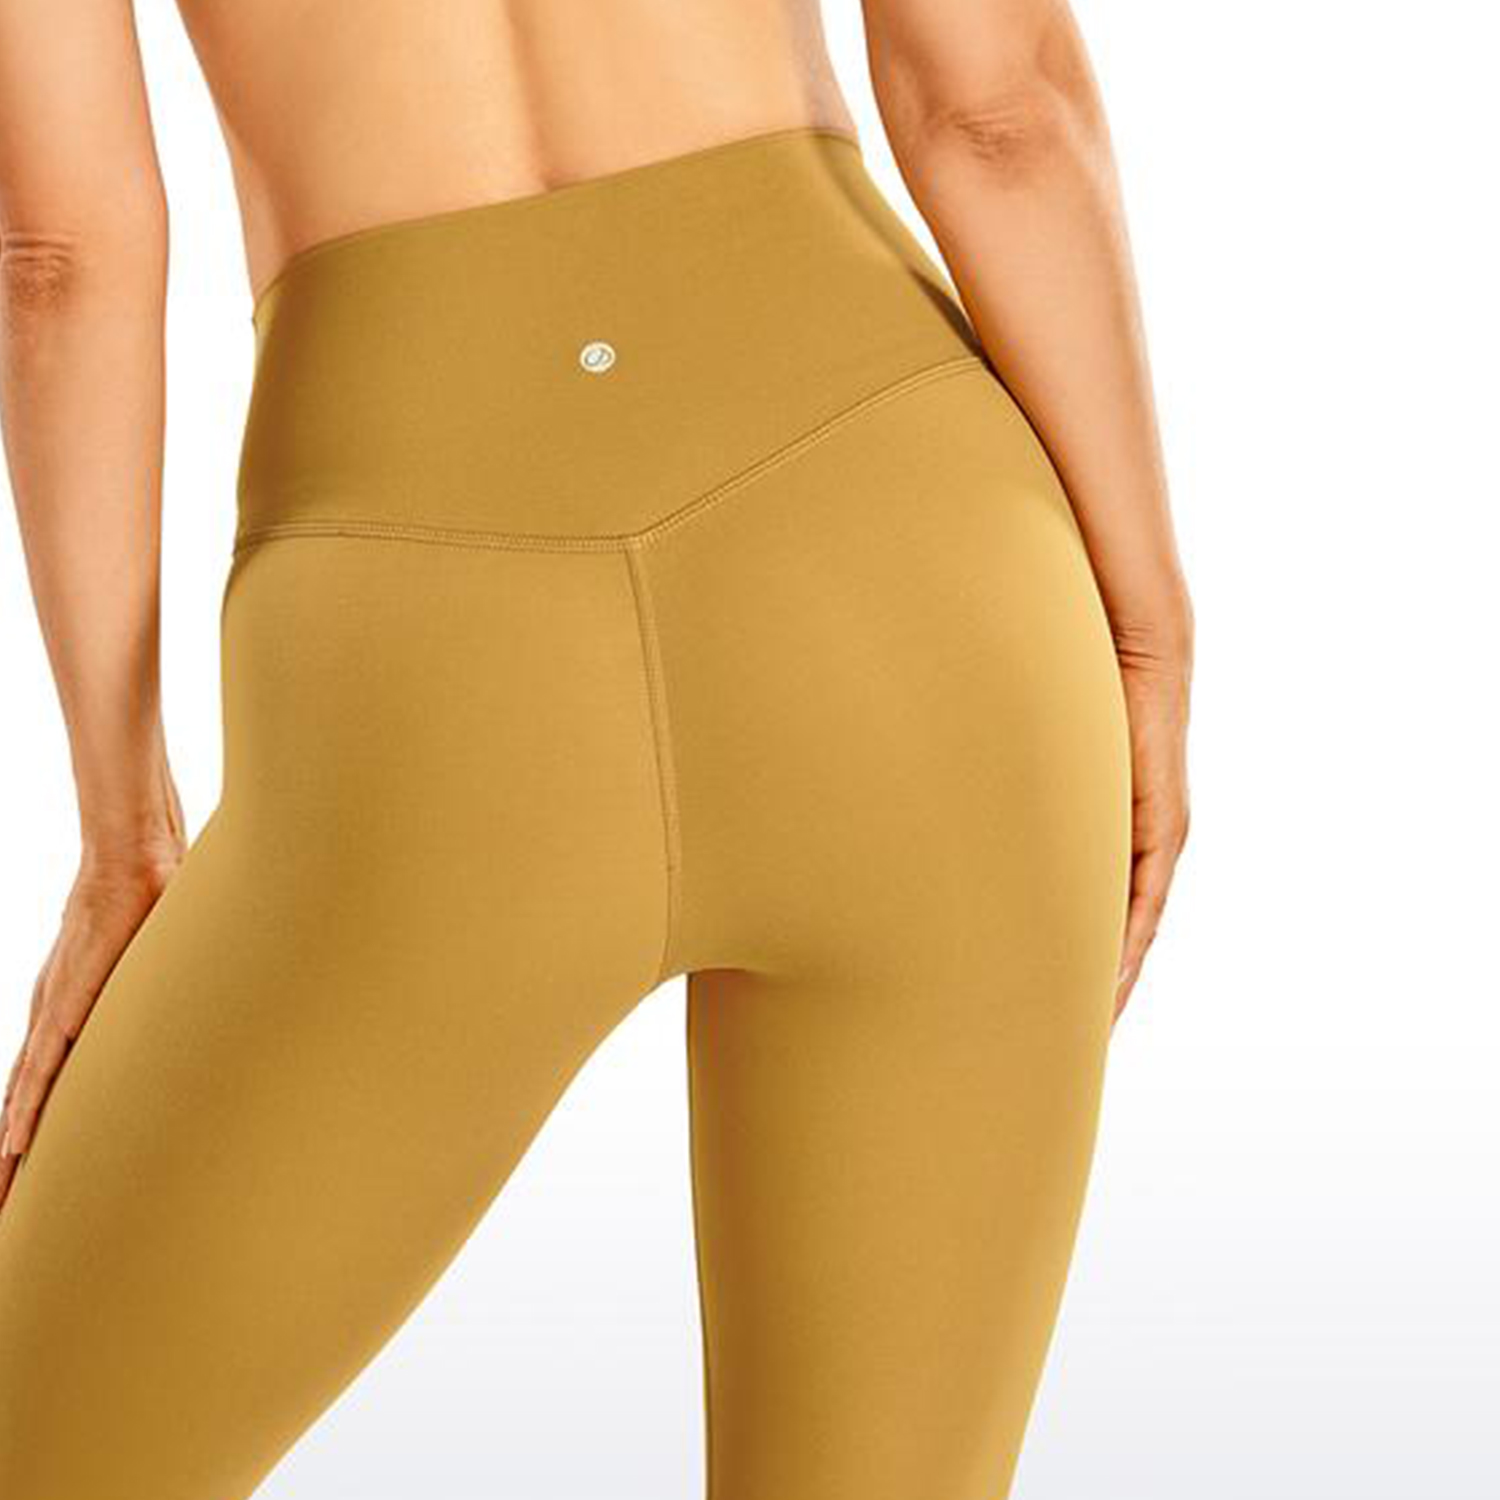 Lululemon Align II Stretchy Yoga Pants - High-Waisted Design, 25 Inch Inseam